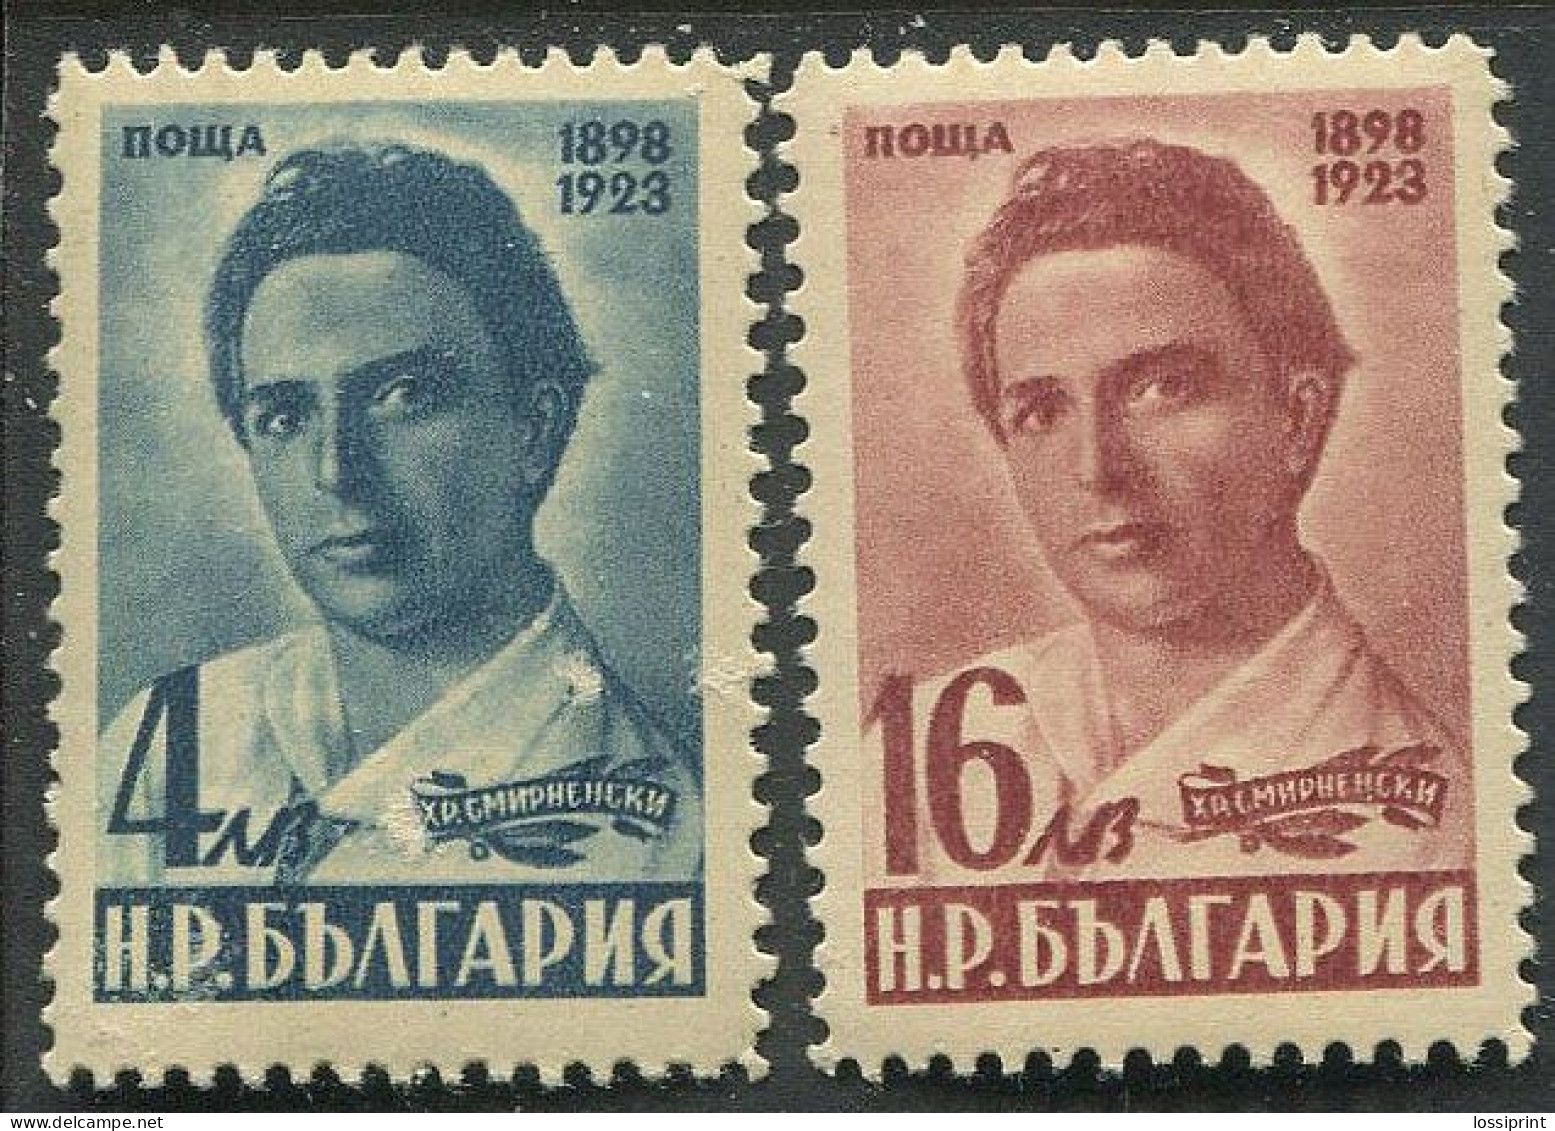 Bulgaria:Unused Stamps Serie H.R.Smirnenski, 1948, MNH - Ongebruikt